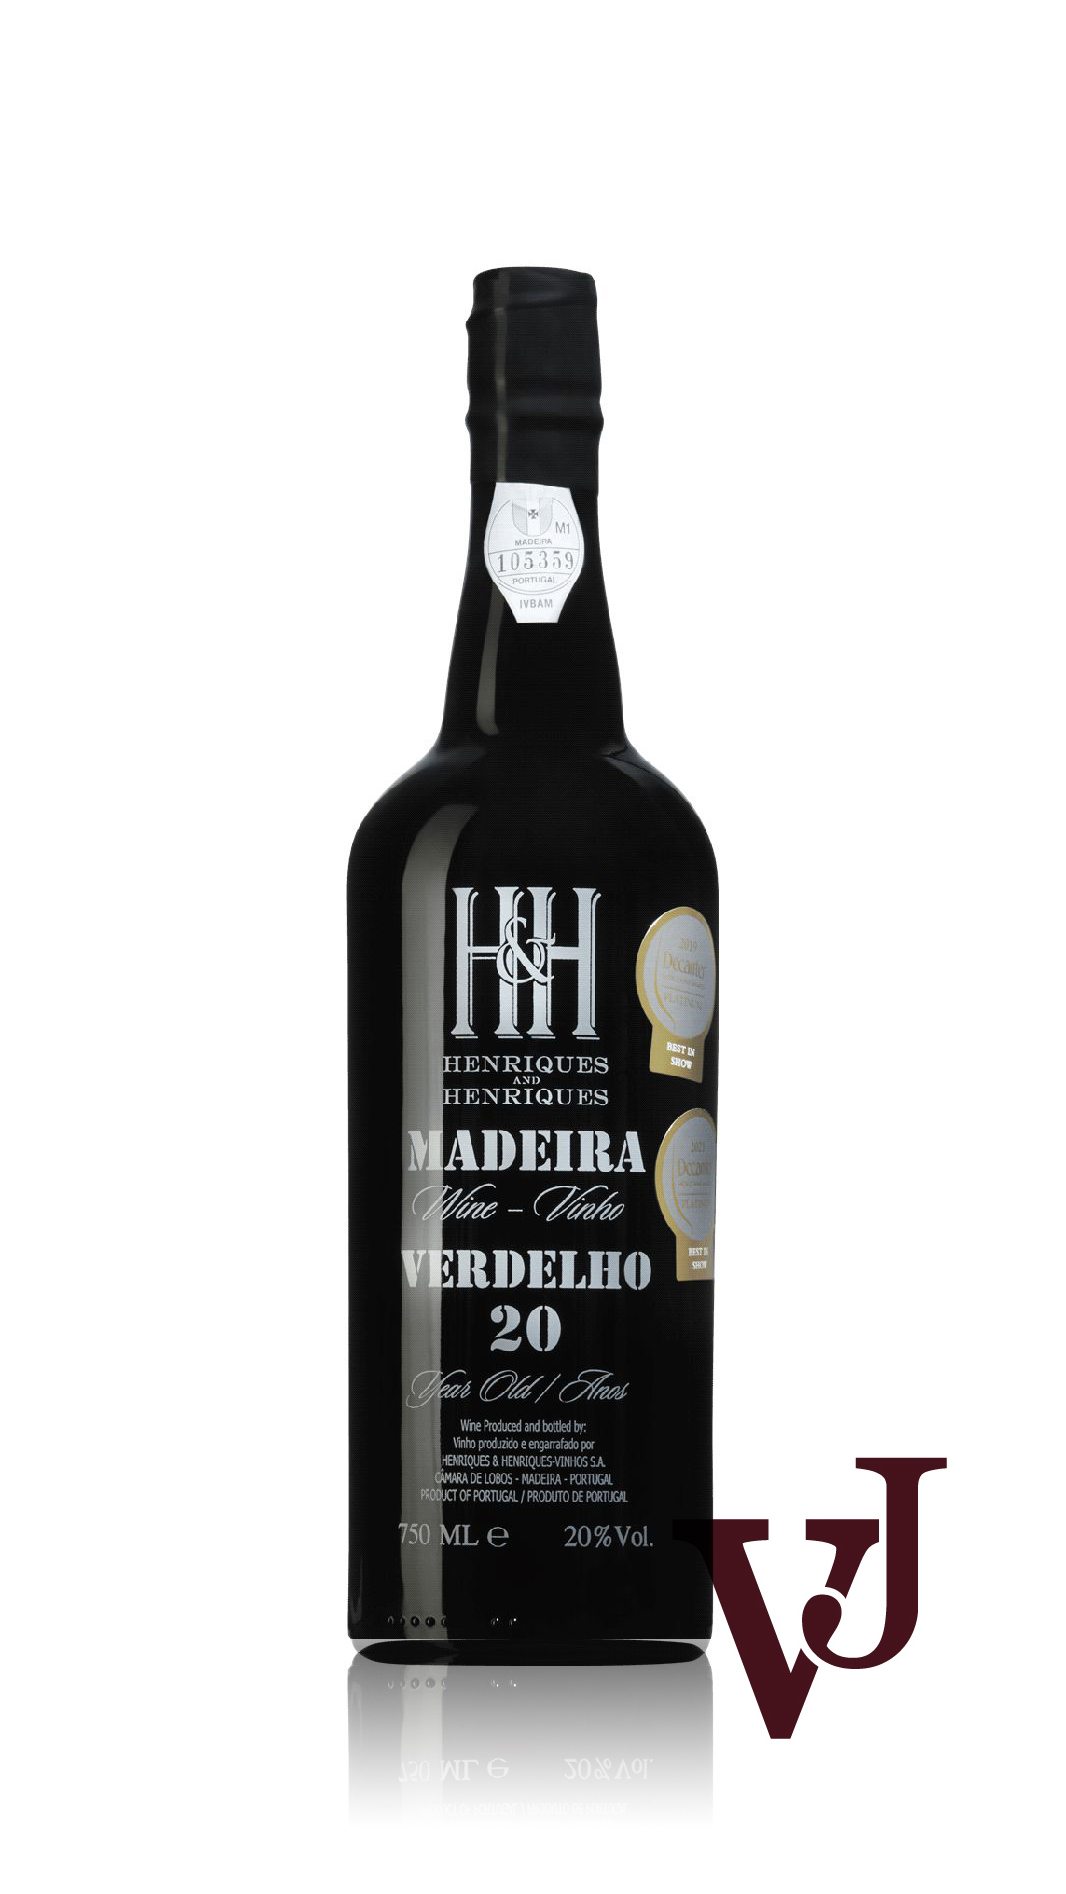 Starkvin - Madeira Verdelho 20 Years Old Henriques & Henriques artikel nummer 9493101 från producenten Henriques & Henriques från området Portugal